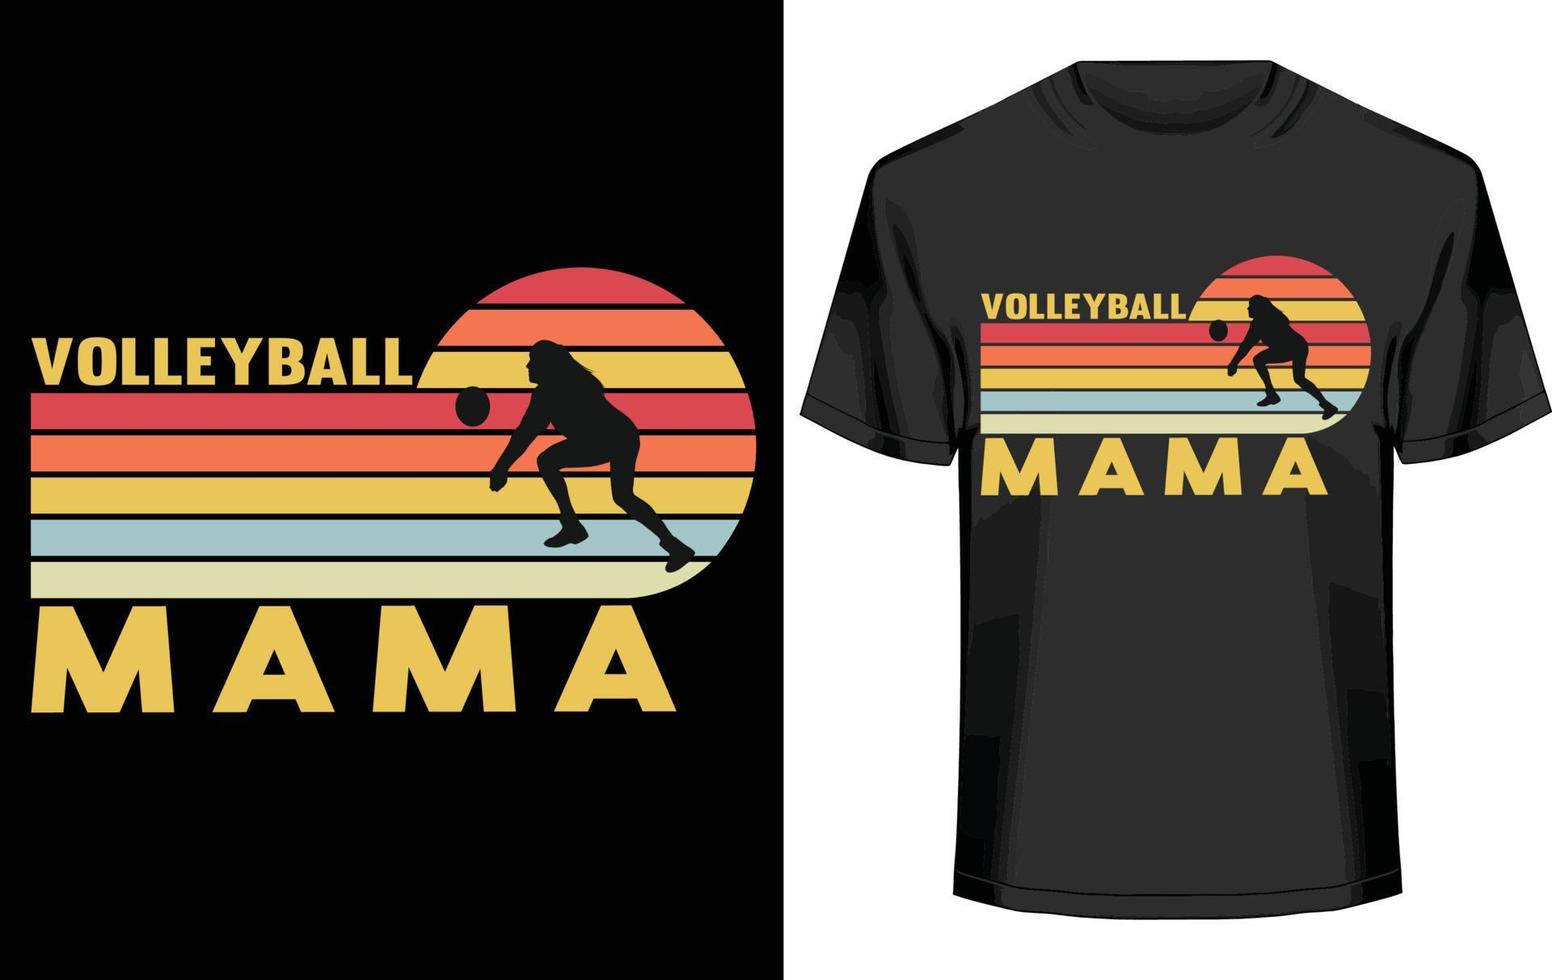 volleyboll t-shirt design vektor